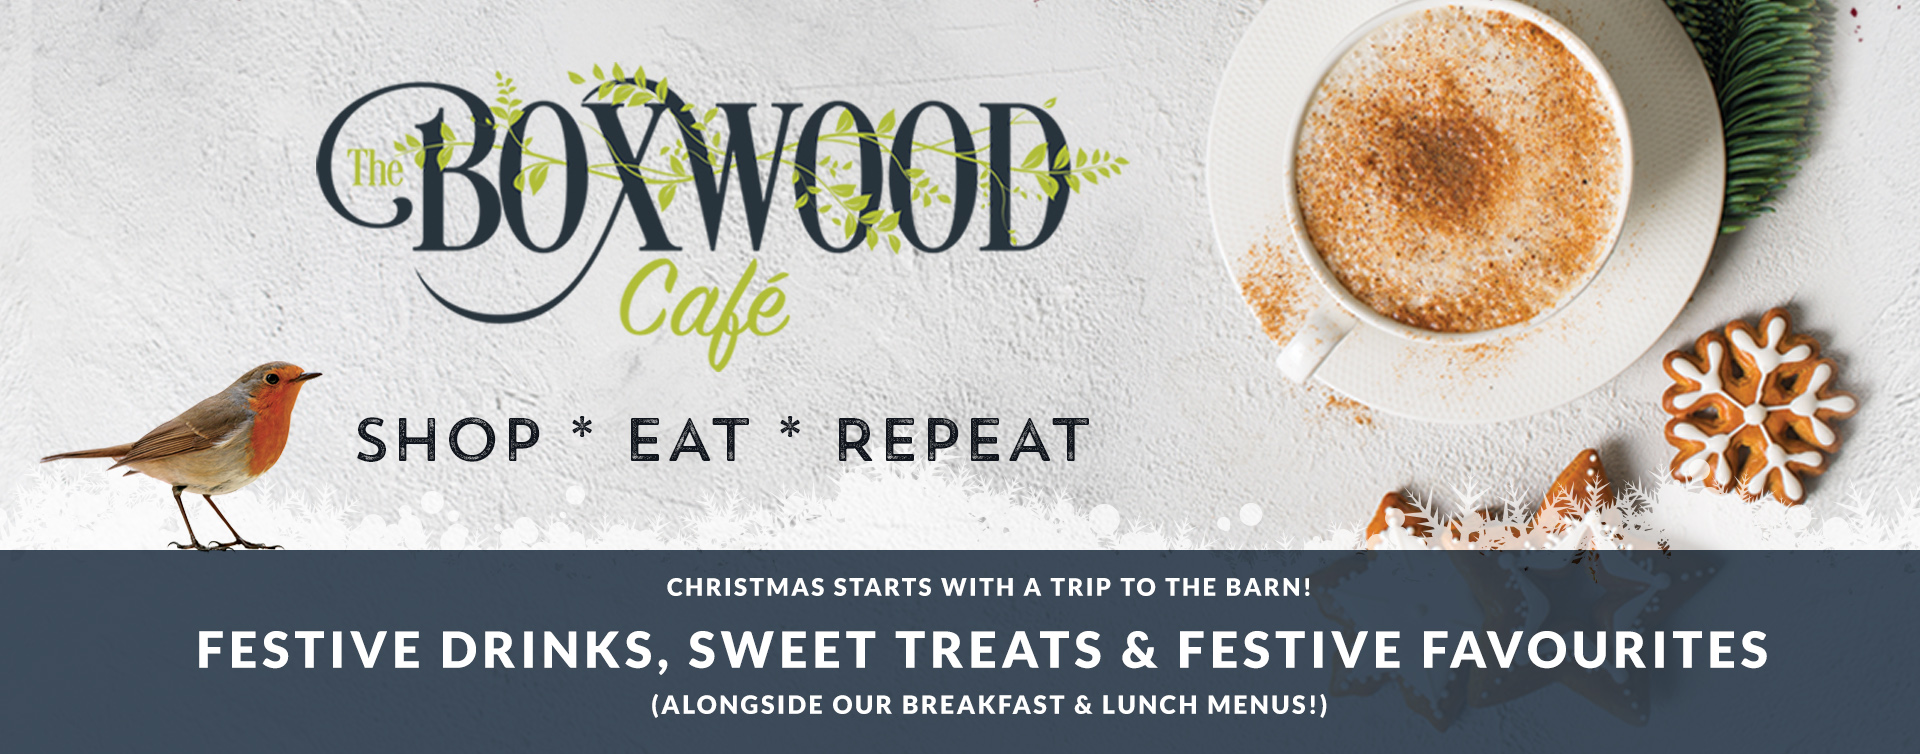 The Boxwood Café